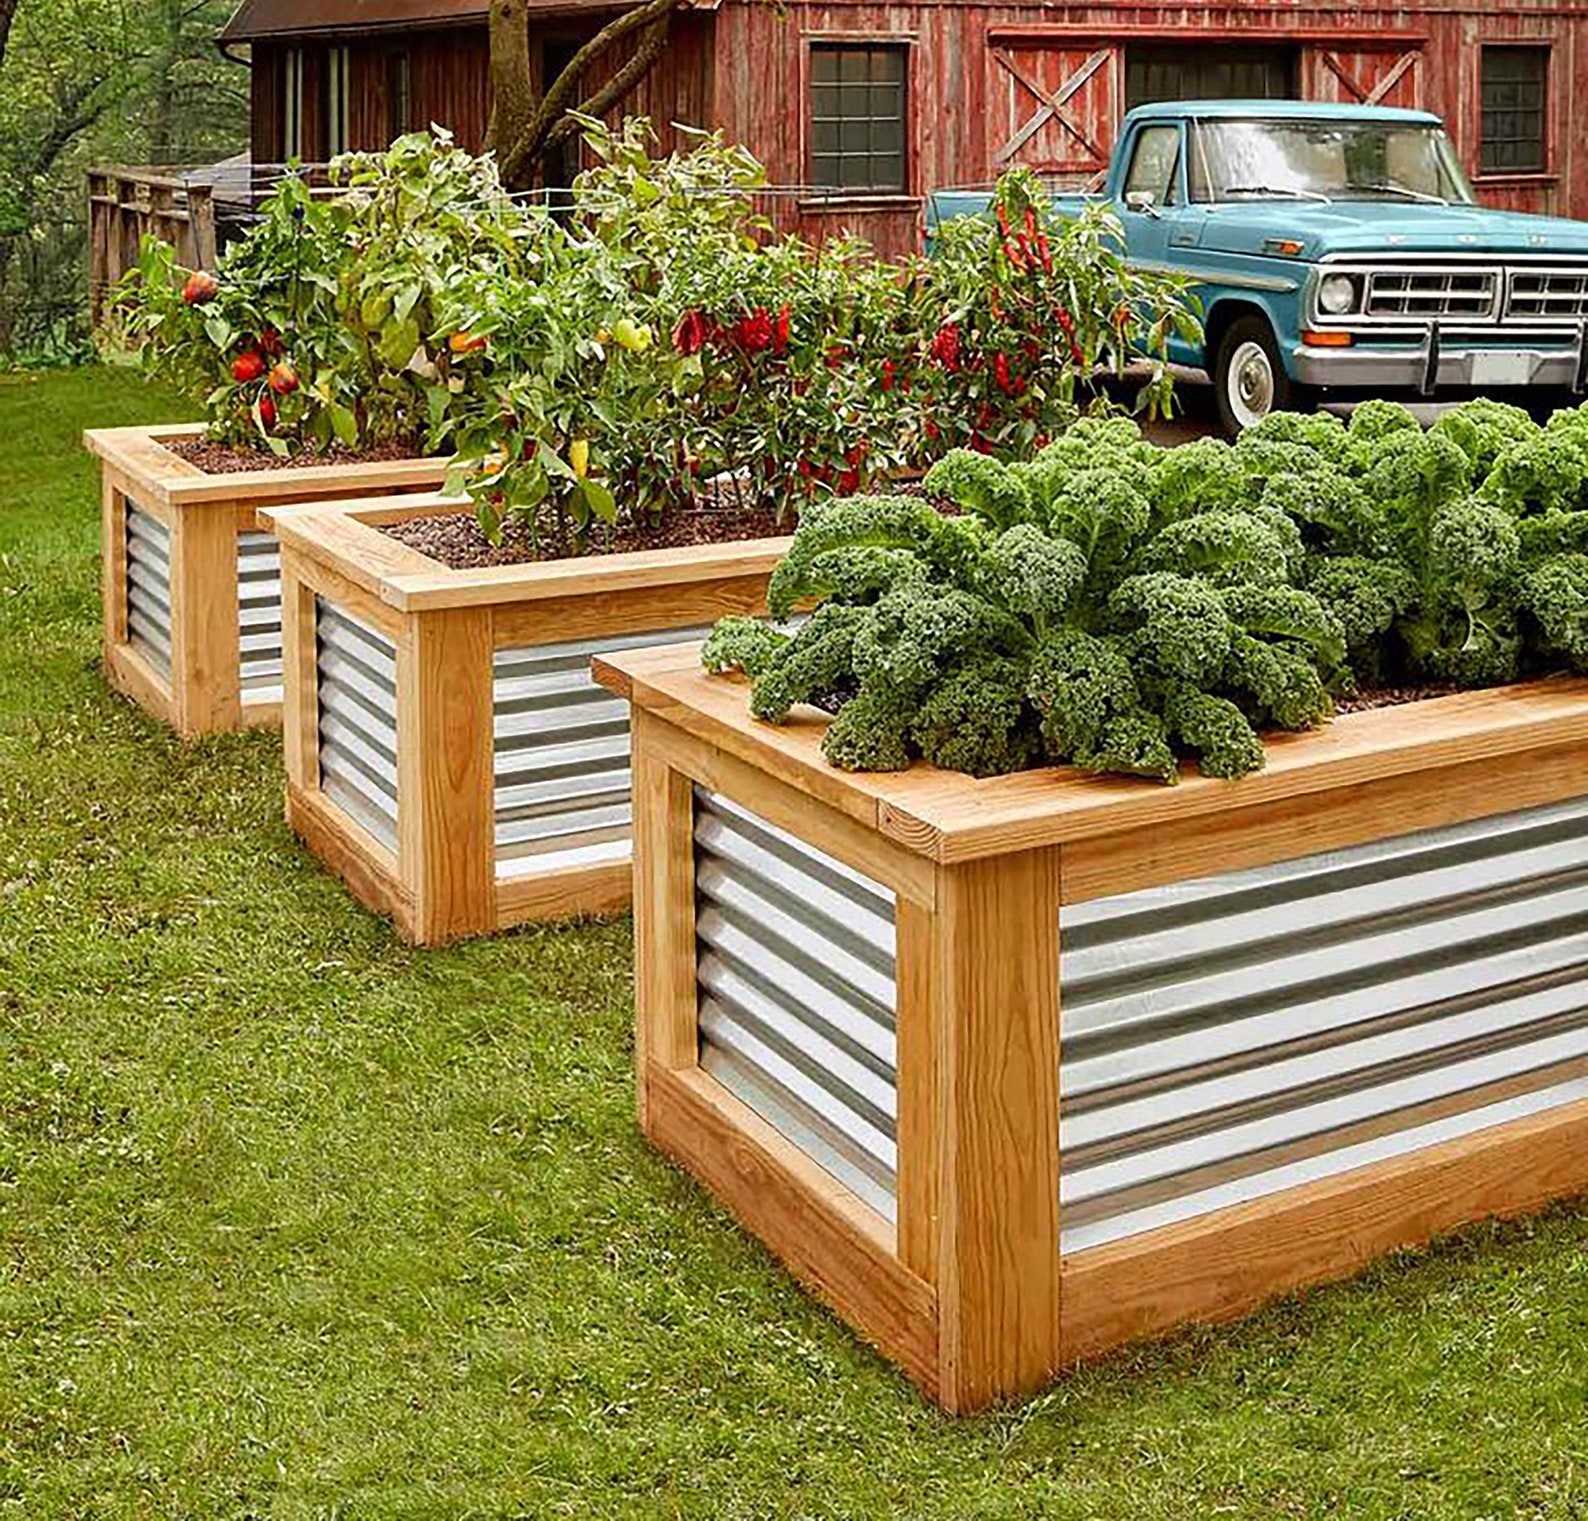 Raised garden beds plans pdf Cedar raised garden bed step by | Etsy